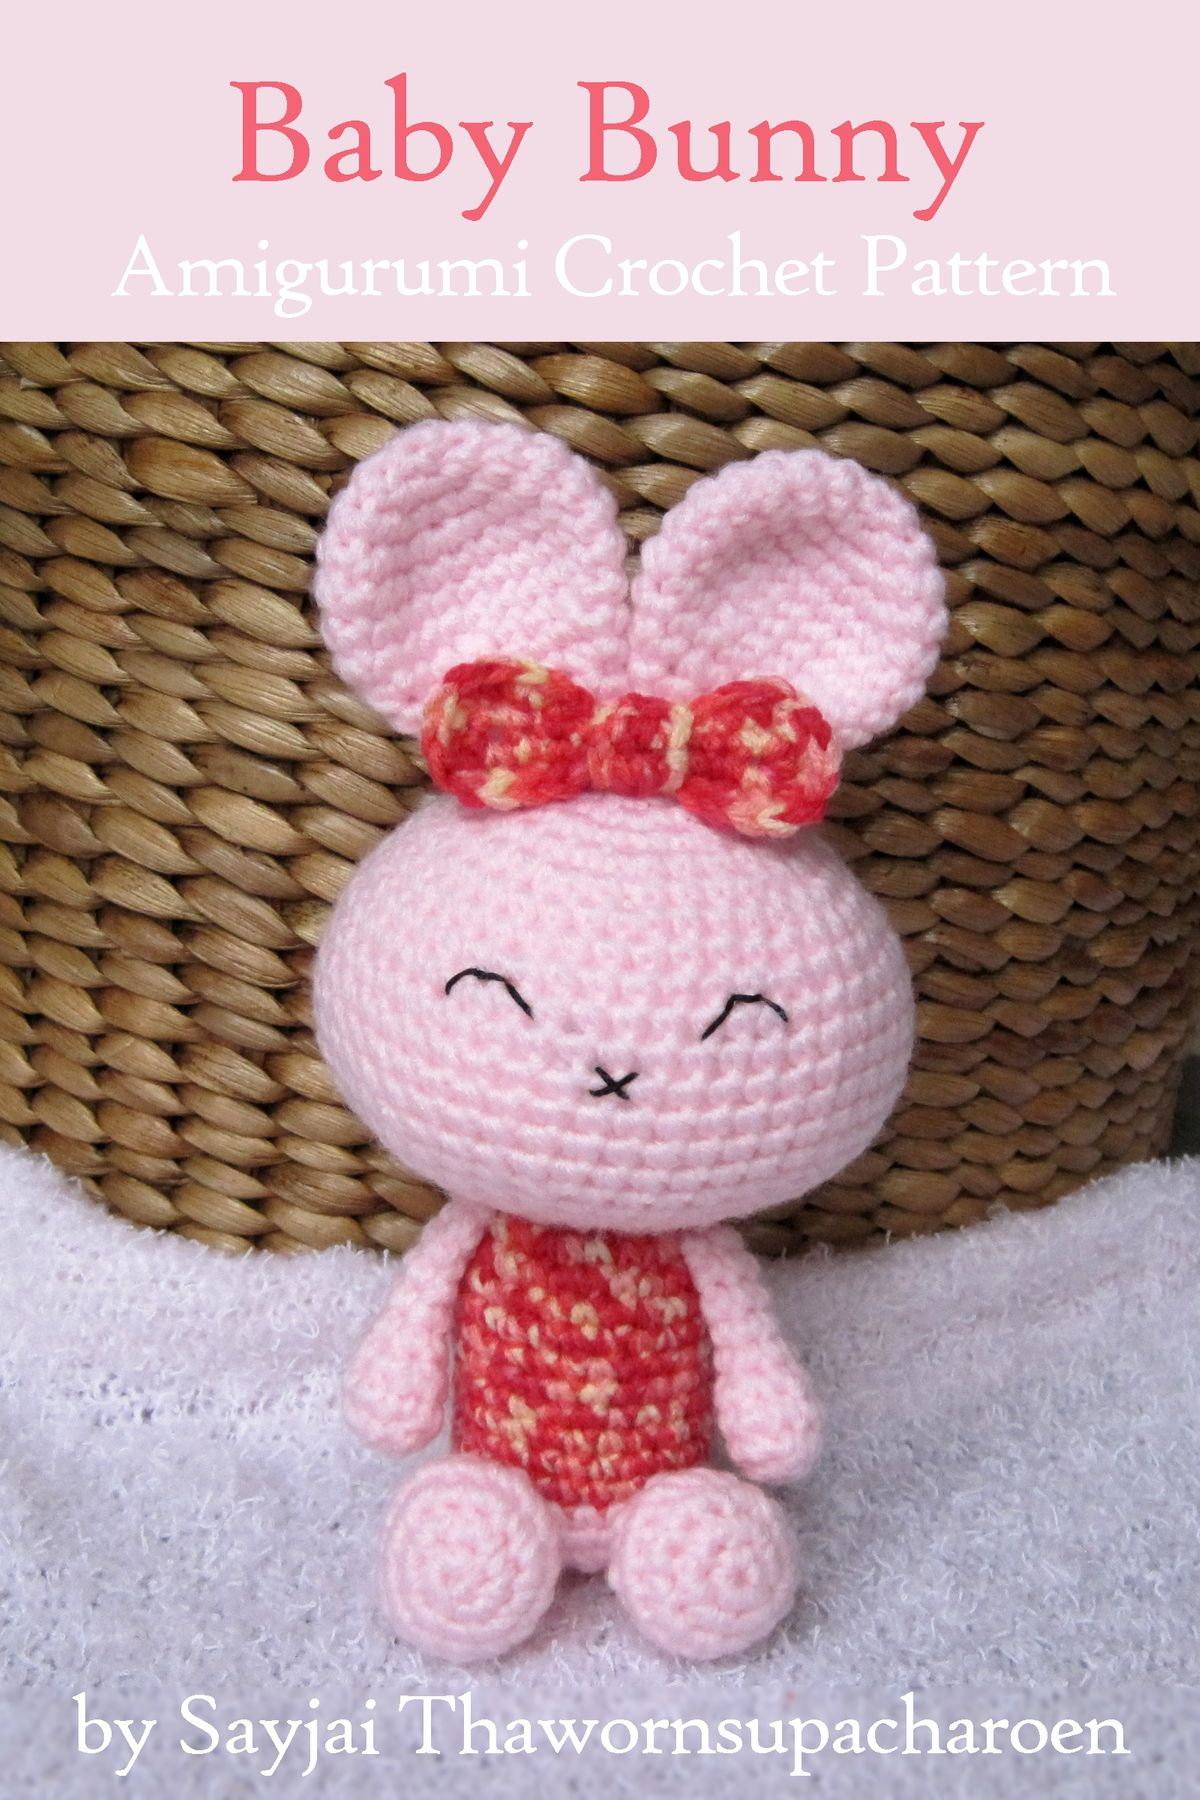 Baby Bunny Crochet Pattern Ba Bunny Amigurumi Crochet Pattern Ebook Sayjai